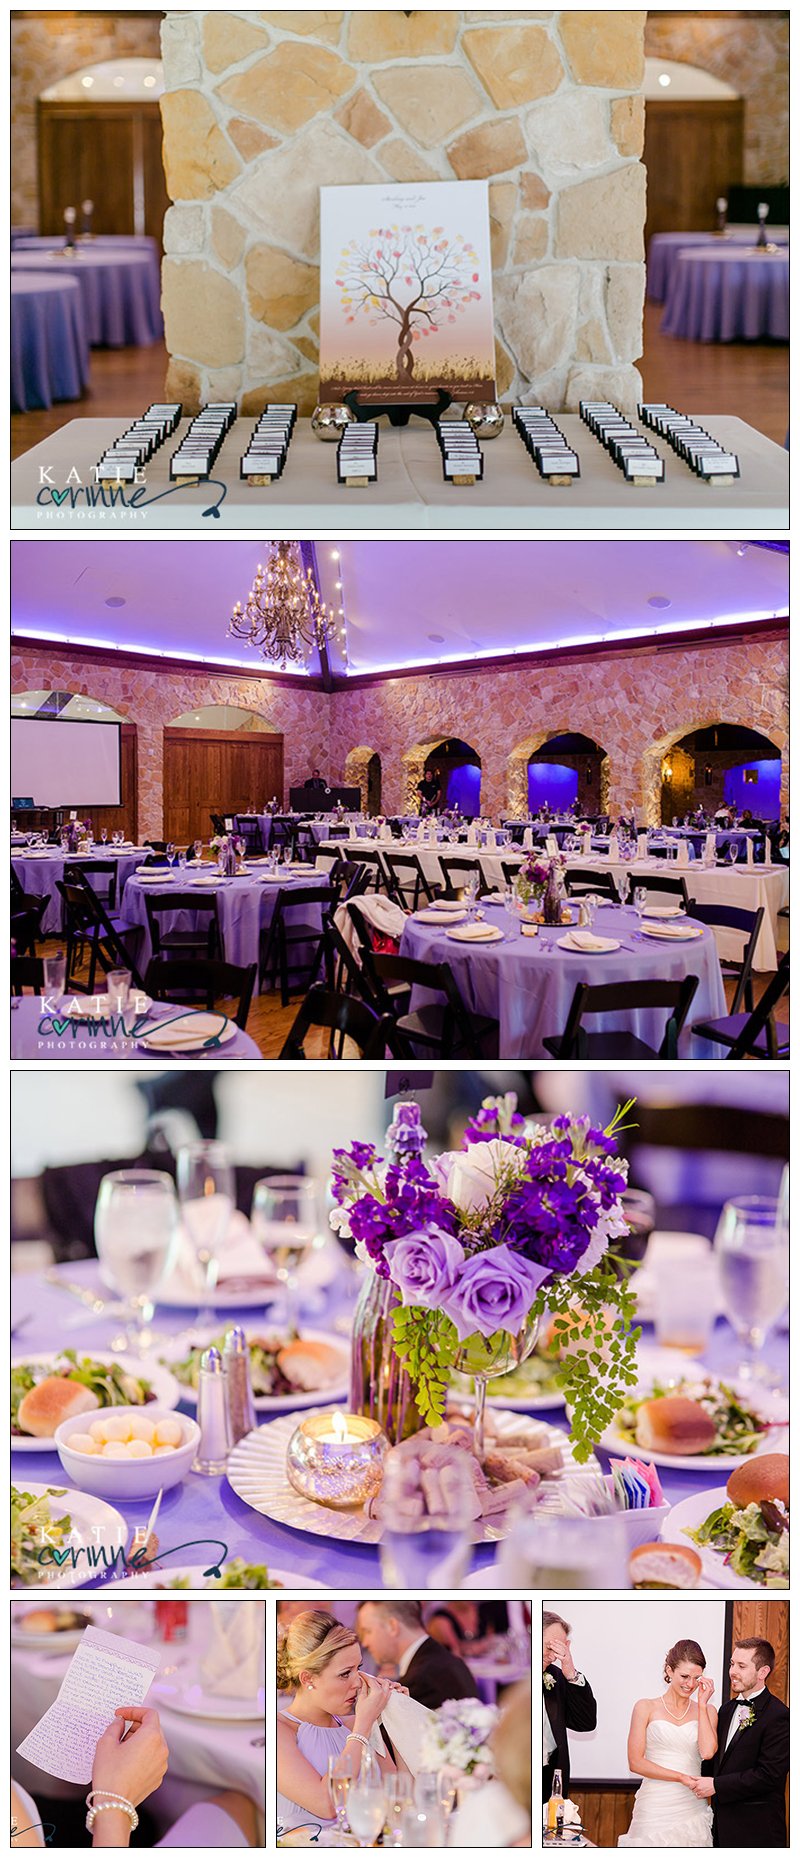 lavender wedding reception, purple uplighting wedding reception, vineyard themed wedding, Baldoria on the water wedding reception, amazing reception details